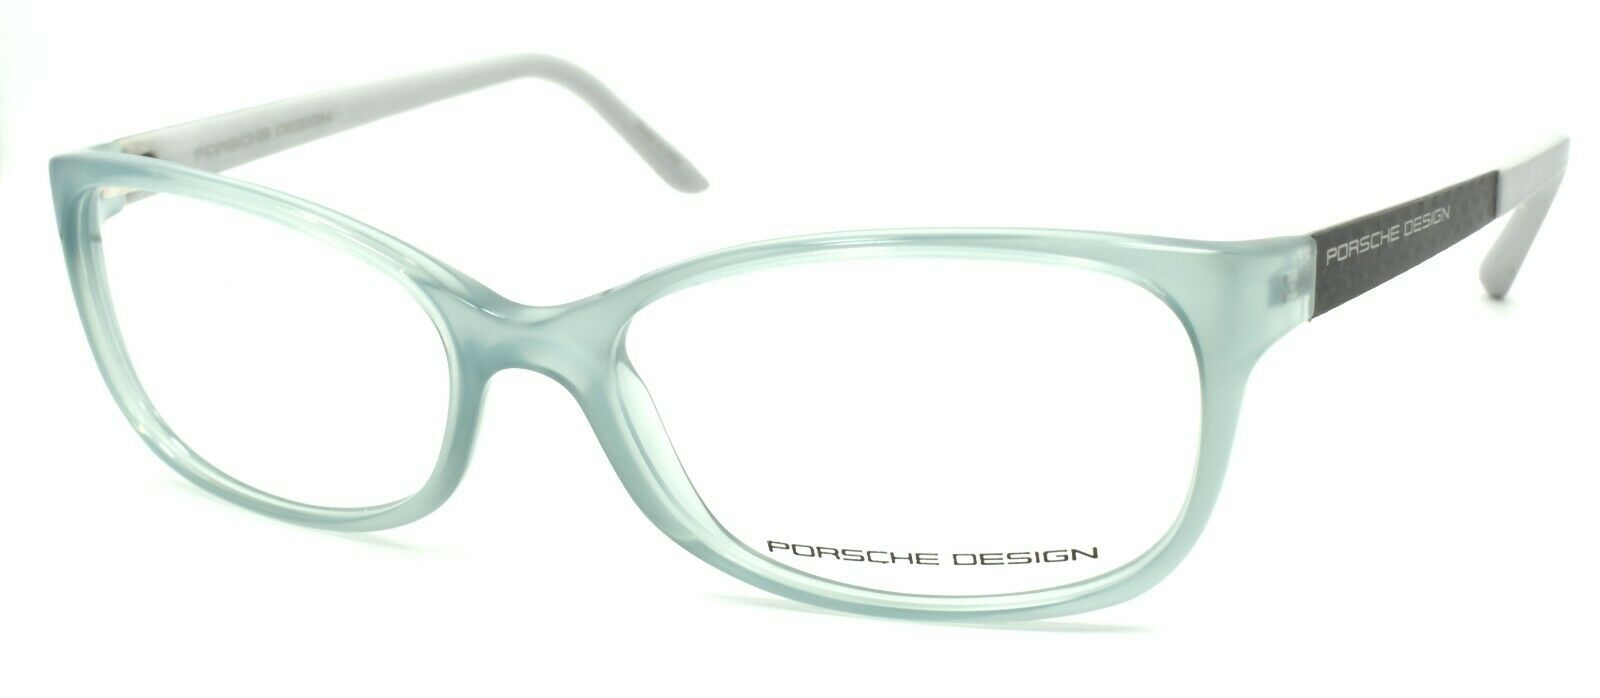 1-Porsche Design P8247 B Women's Eyeglasses Frames 55-16-135 Aqua / Gray ITALY-4046901717223-IKSpecs